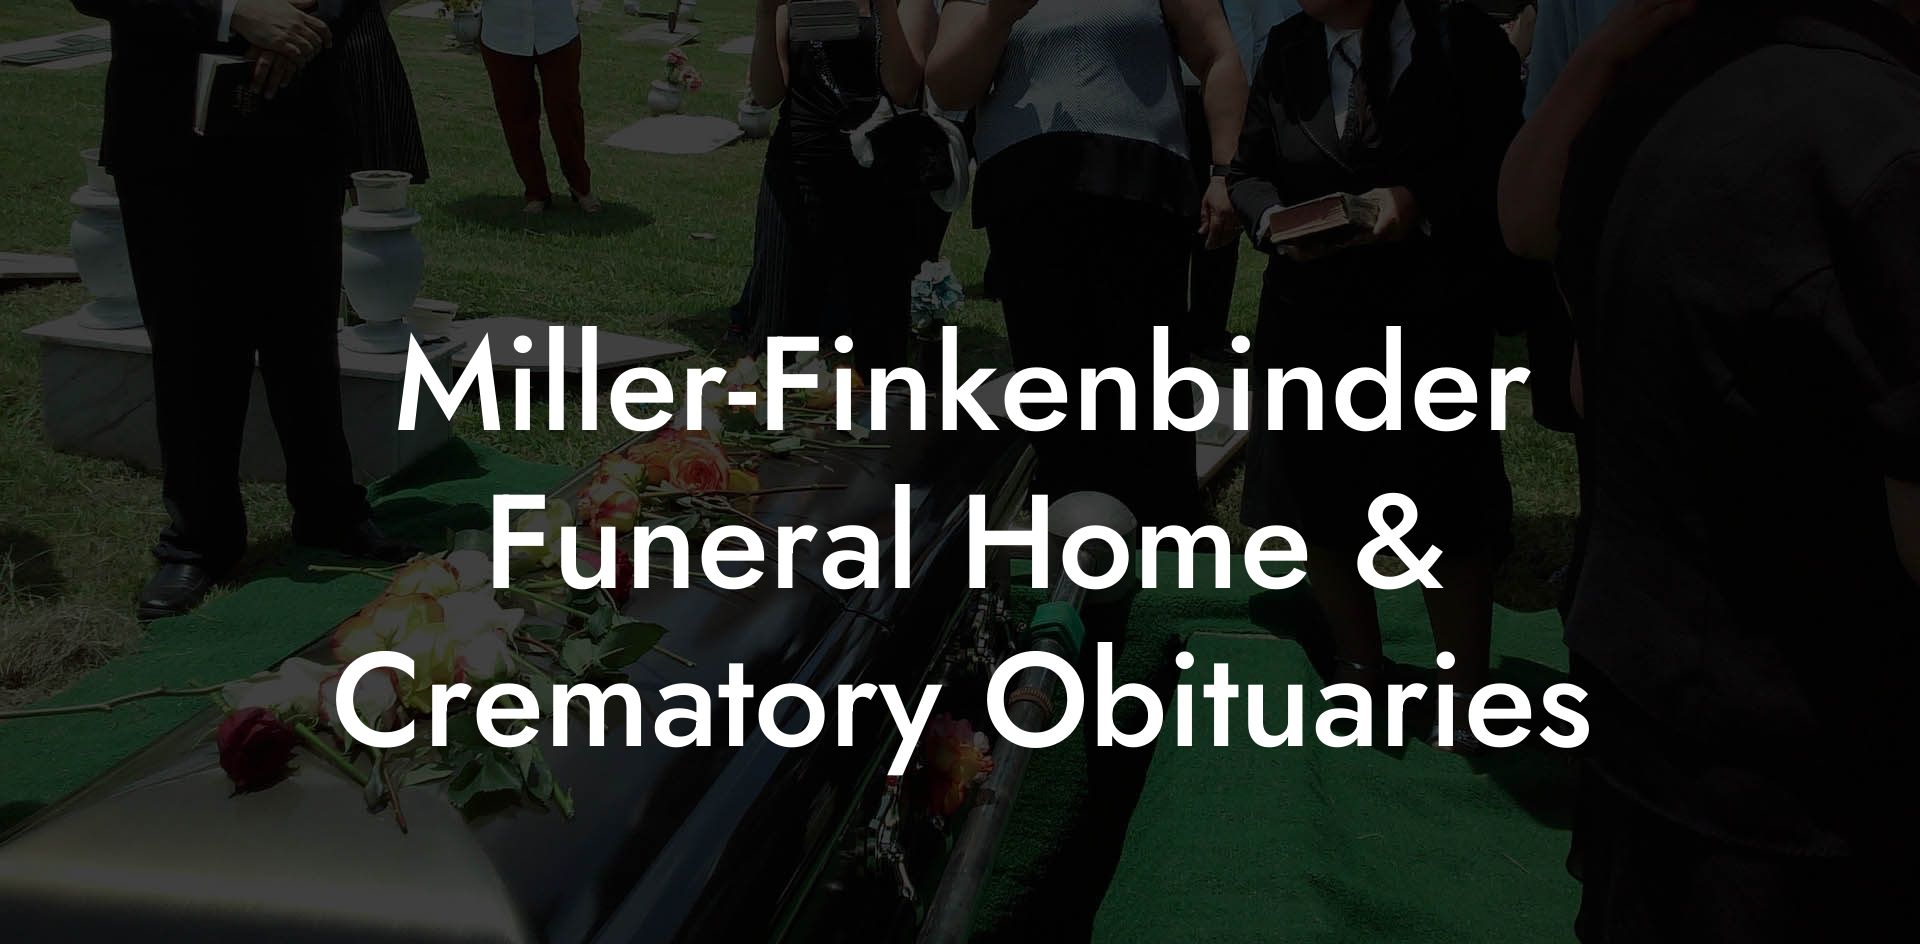 Miller-Finkenbinder Funeral Home & Crematory Obituaries